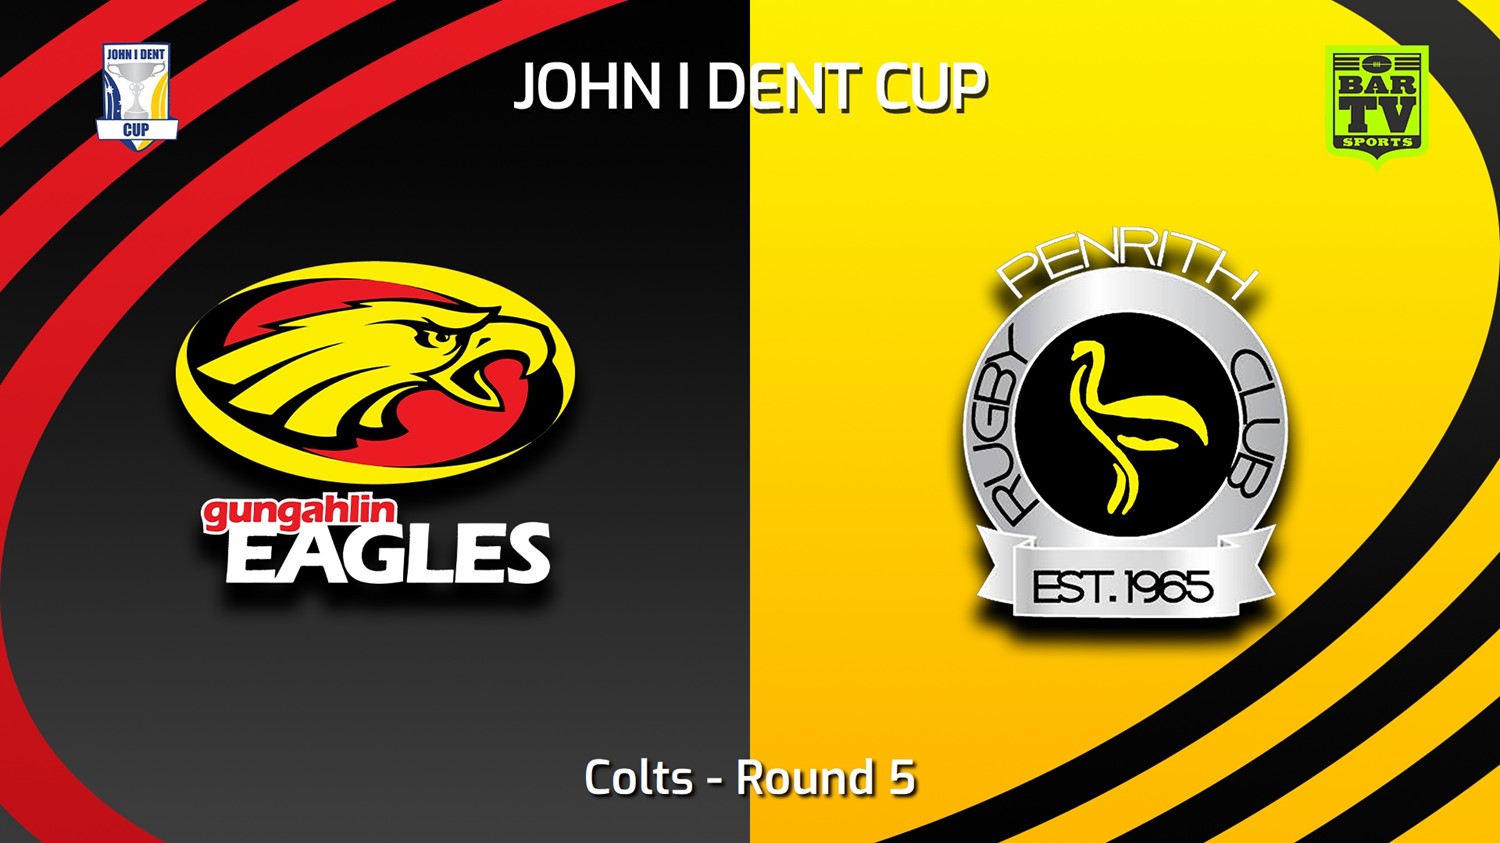 230513-John I Dent (ACT) Round 5 - Colts - Gungahlin Eagles v Penrith Emus Minigame Slate Image